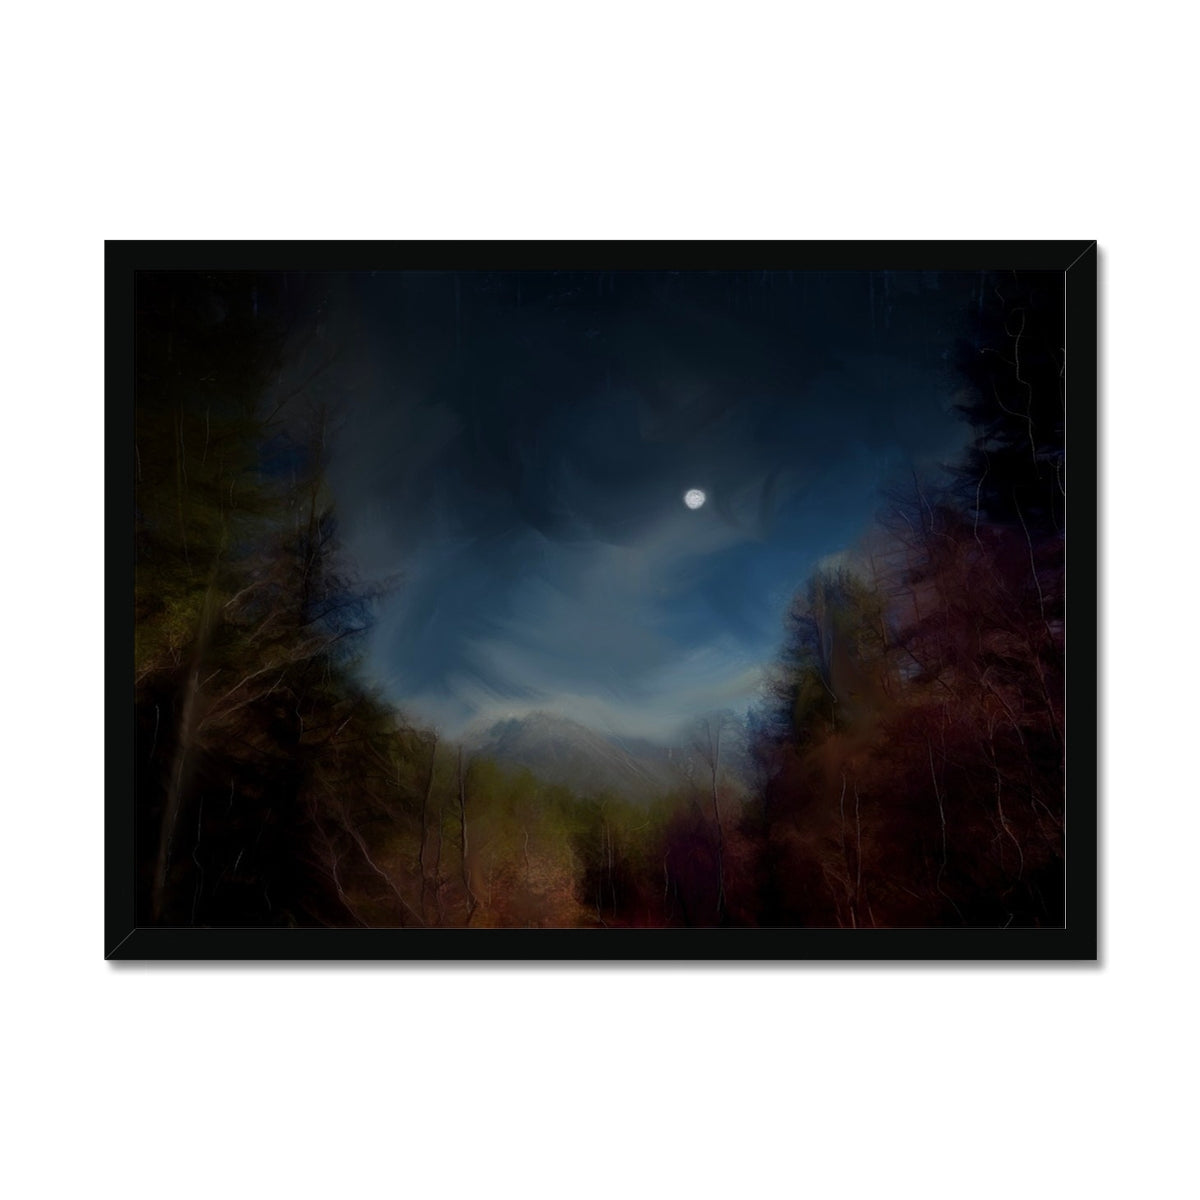 Glencoe Lochan Moonlight Painting | Framed Prints From Scotland-Framed Prints-Scottish Lochs & Mountains Art Gallery-A2 Landscape-Black Frame-Paintings, Prints, Homeware, Art Gifts From Scotland By Scottish Artist Kevin Hunter